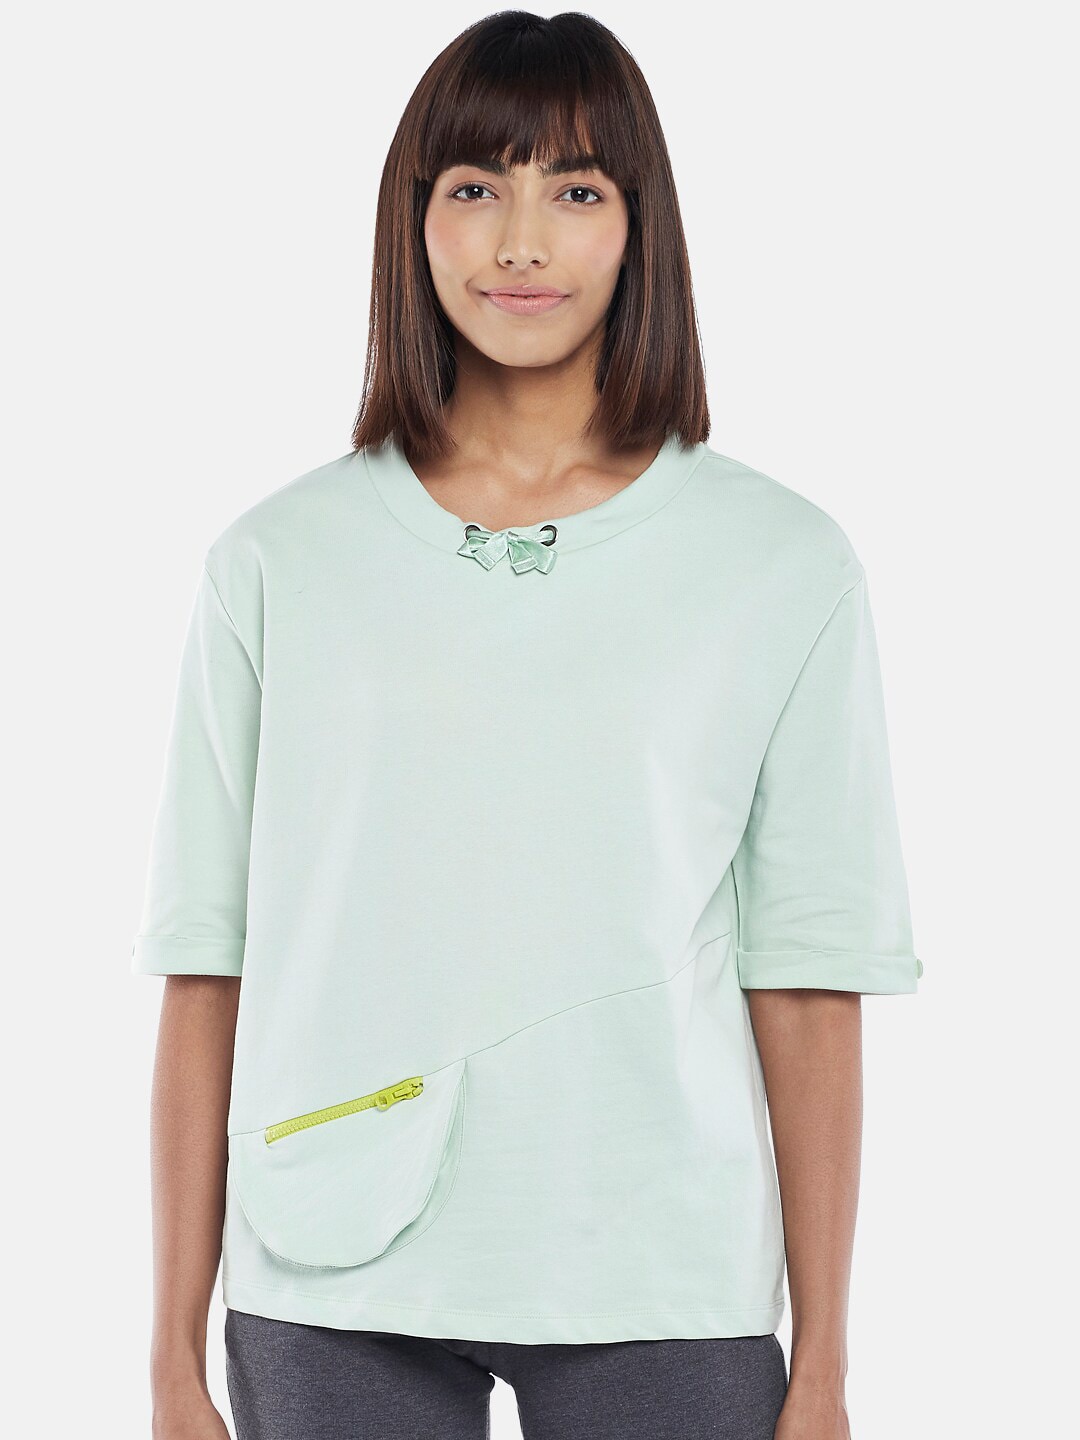 Ajile by Pantaloons Women Green Sweatshirt Price in India